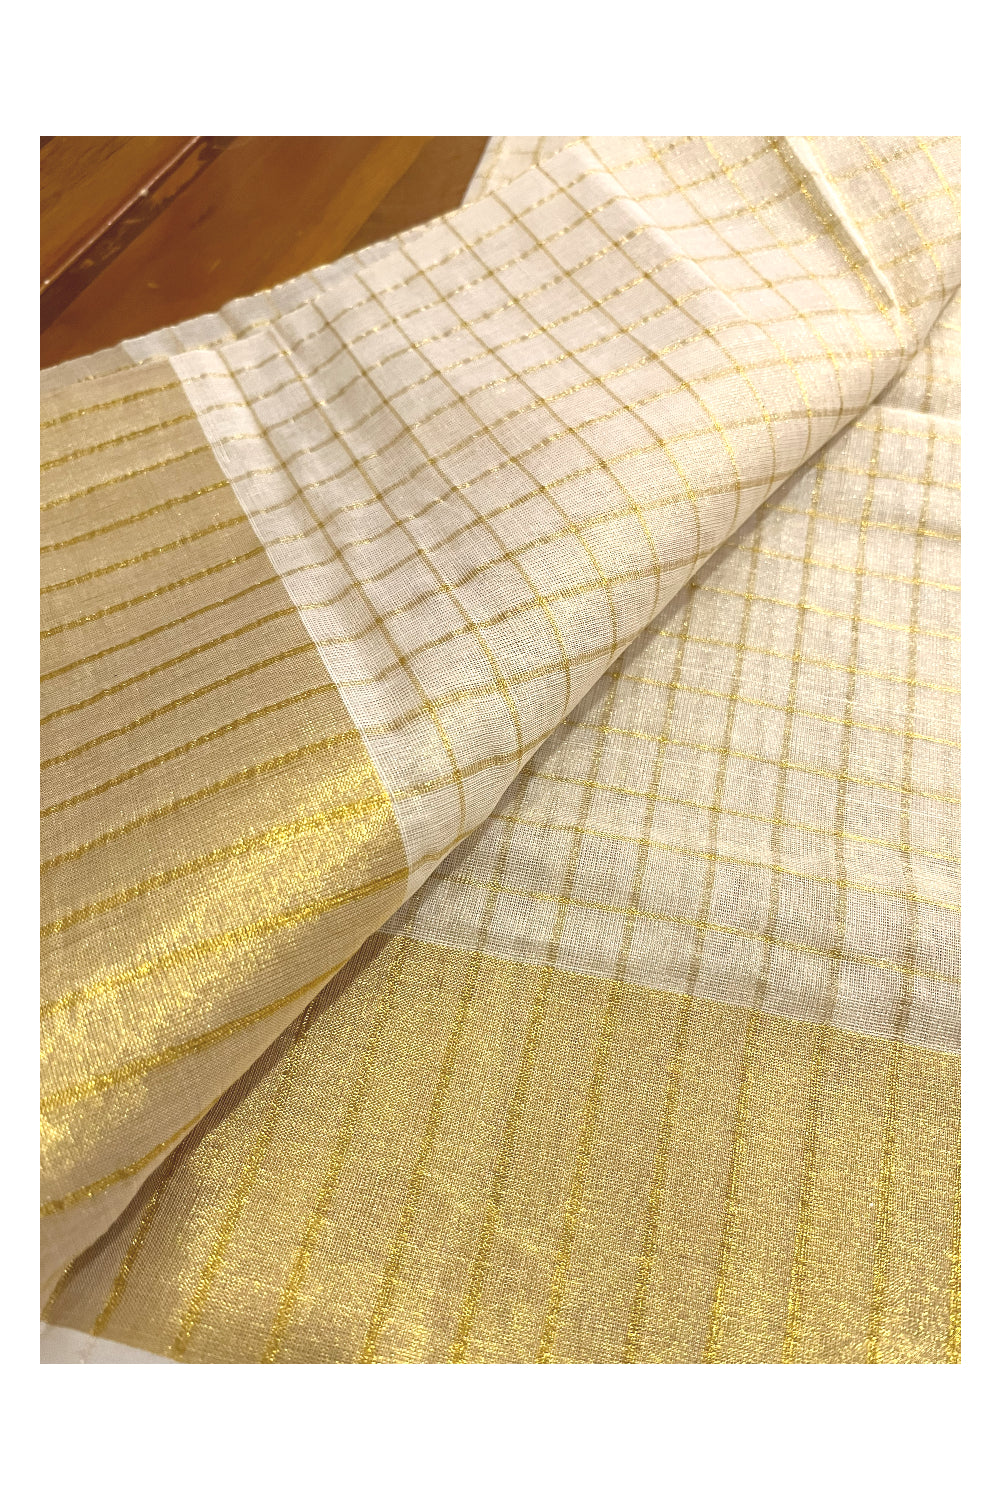 Southloom Premium Handloom Tissue Kasavu Set Mundu (Mundum Neriyathum) with Check Designs Across Body 2.80 Mtrs